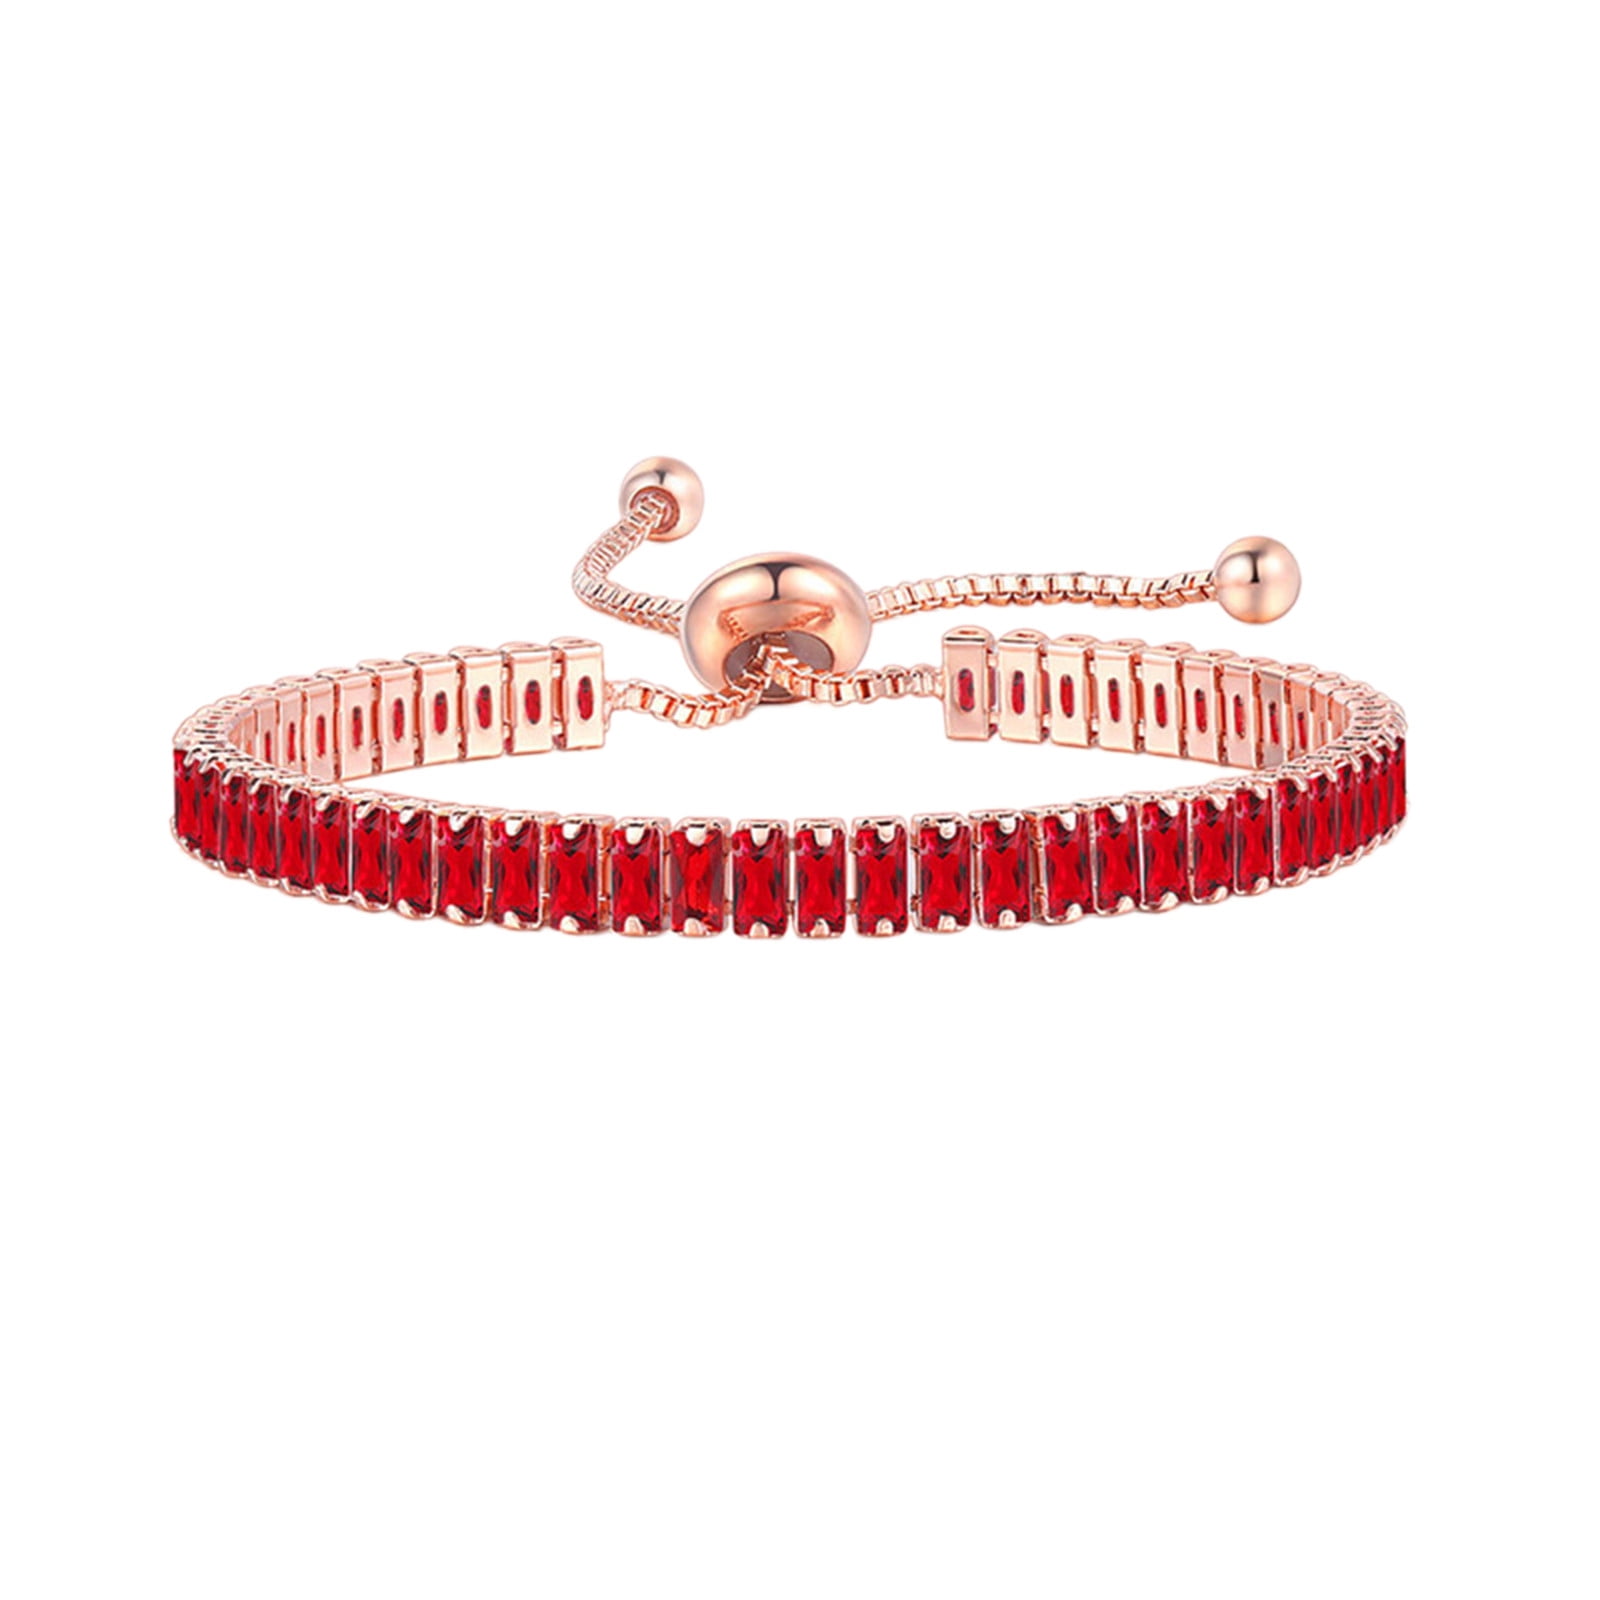 Strawberry Milk ombre beaded bracelet